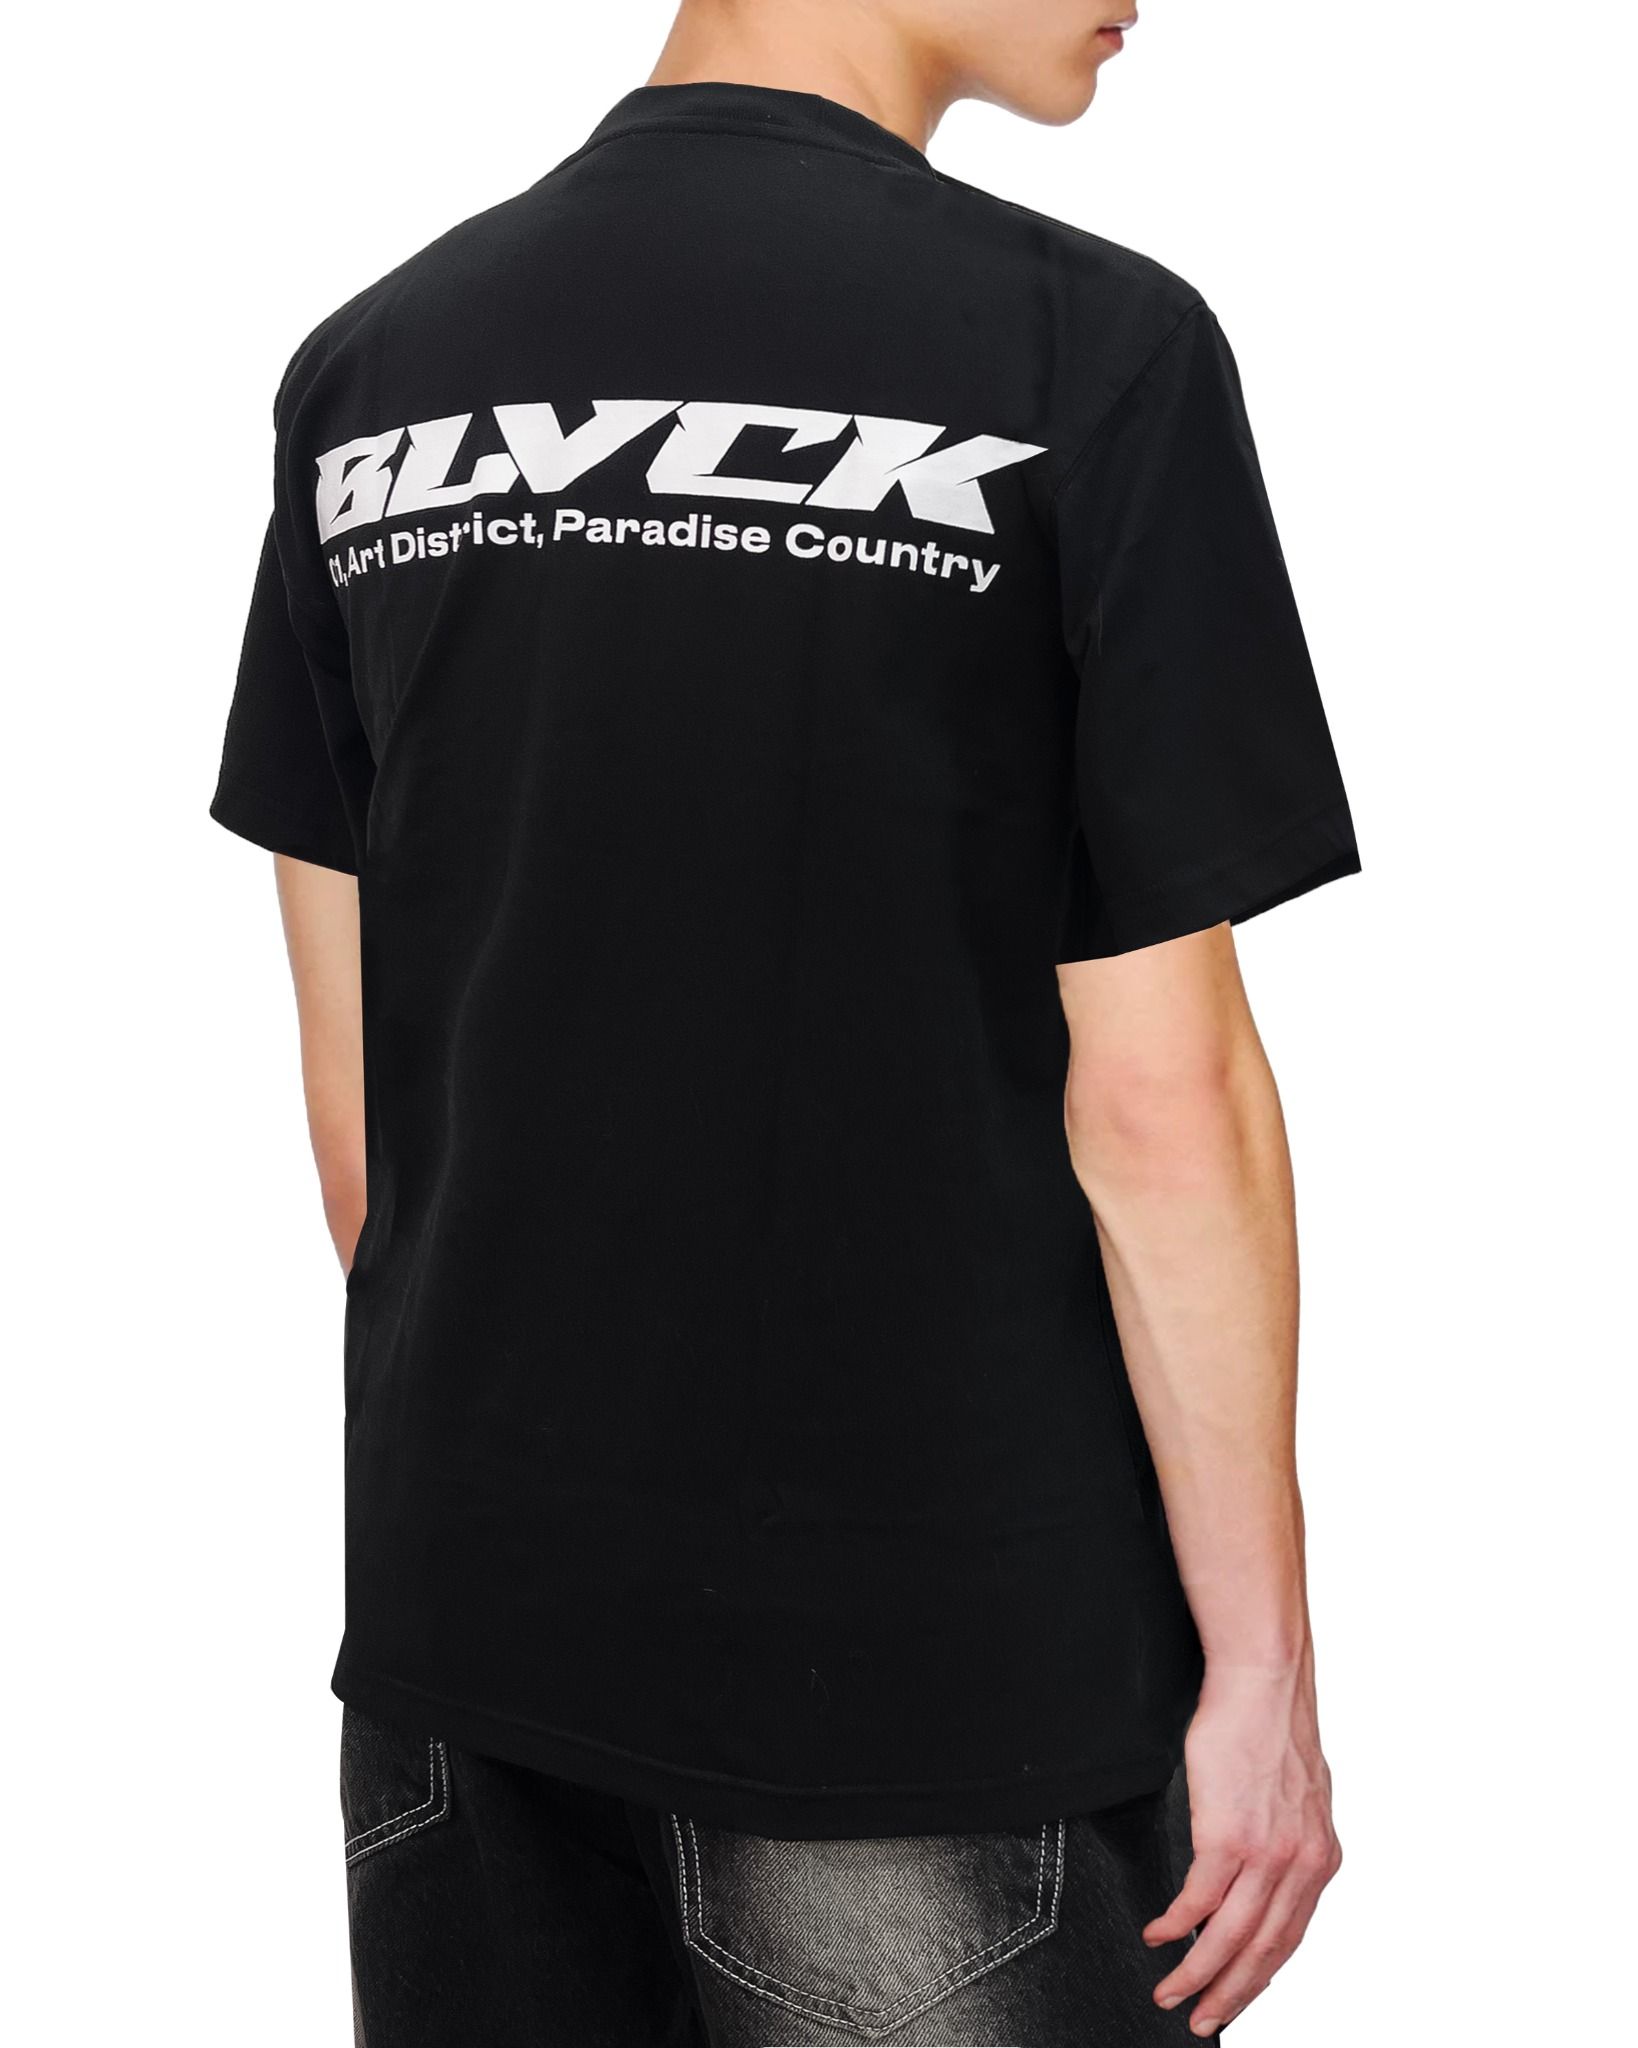  BLVCK ITEMS - regular t-shirt 